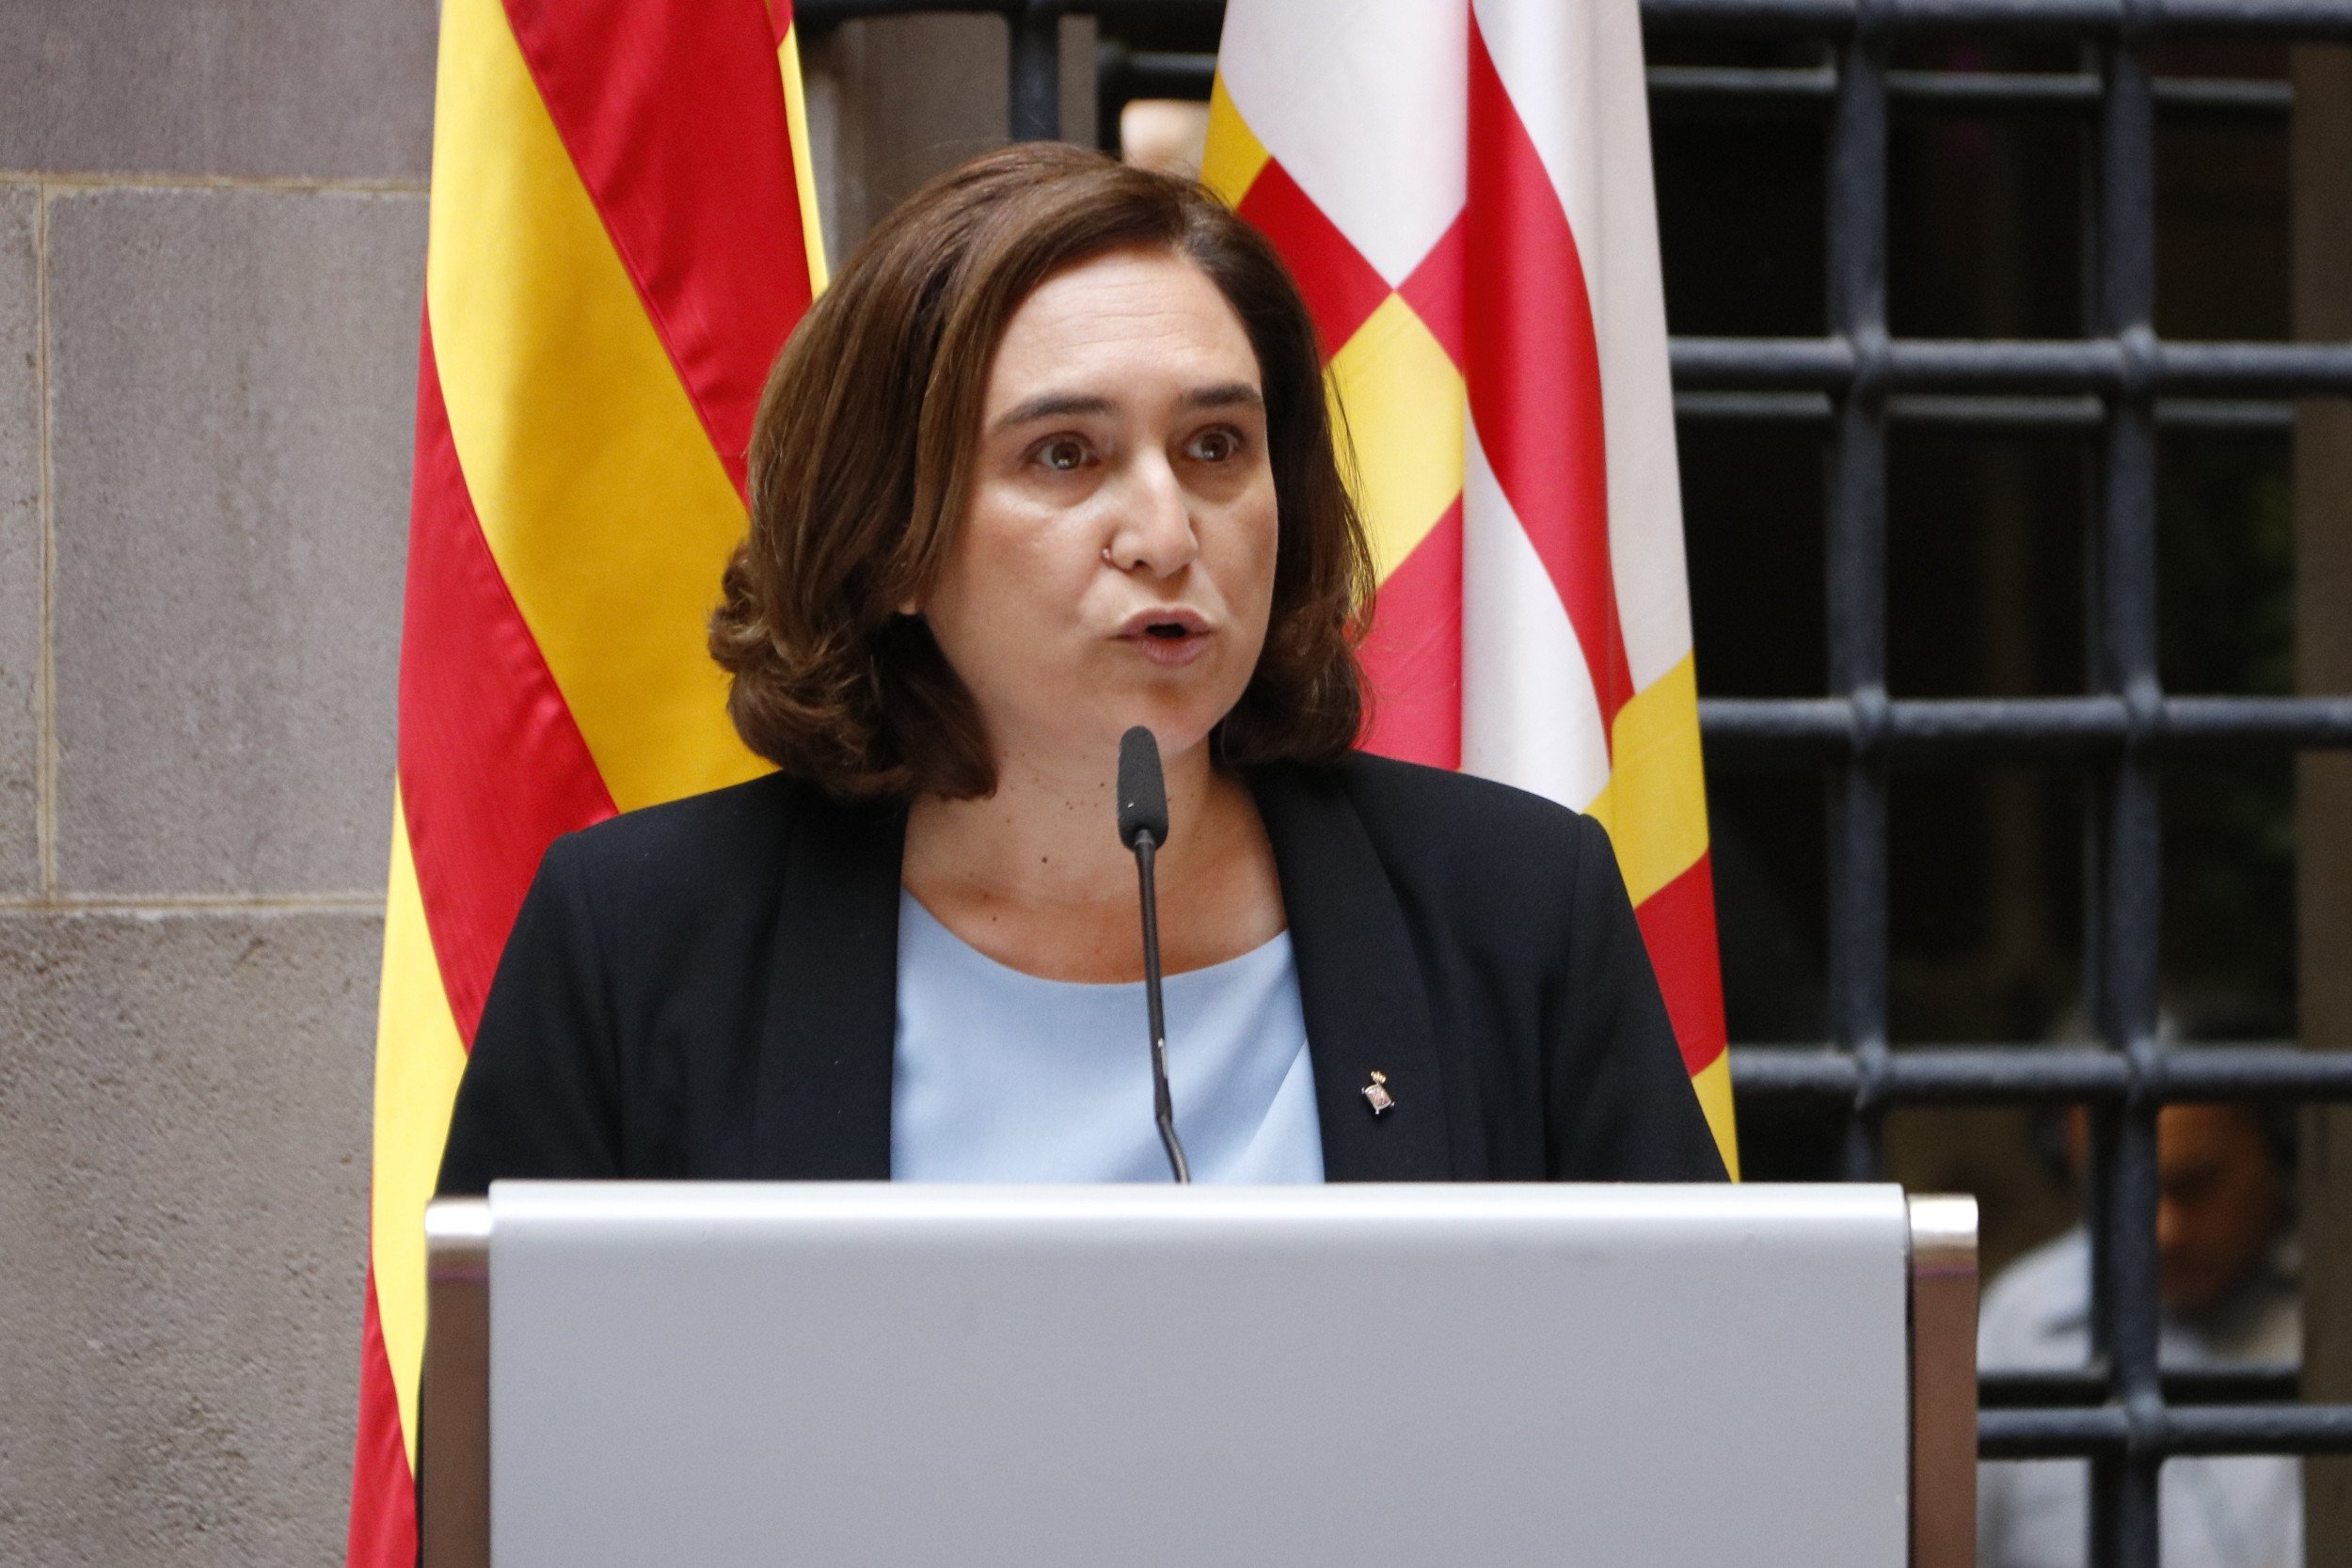 Barcelona's mayor summons European consuls in search for EU mediation